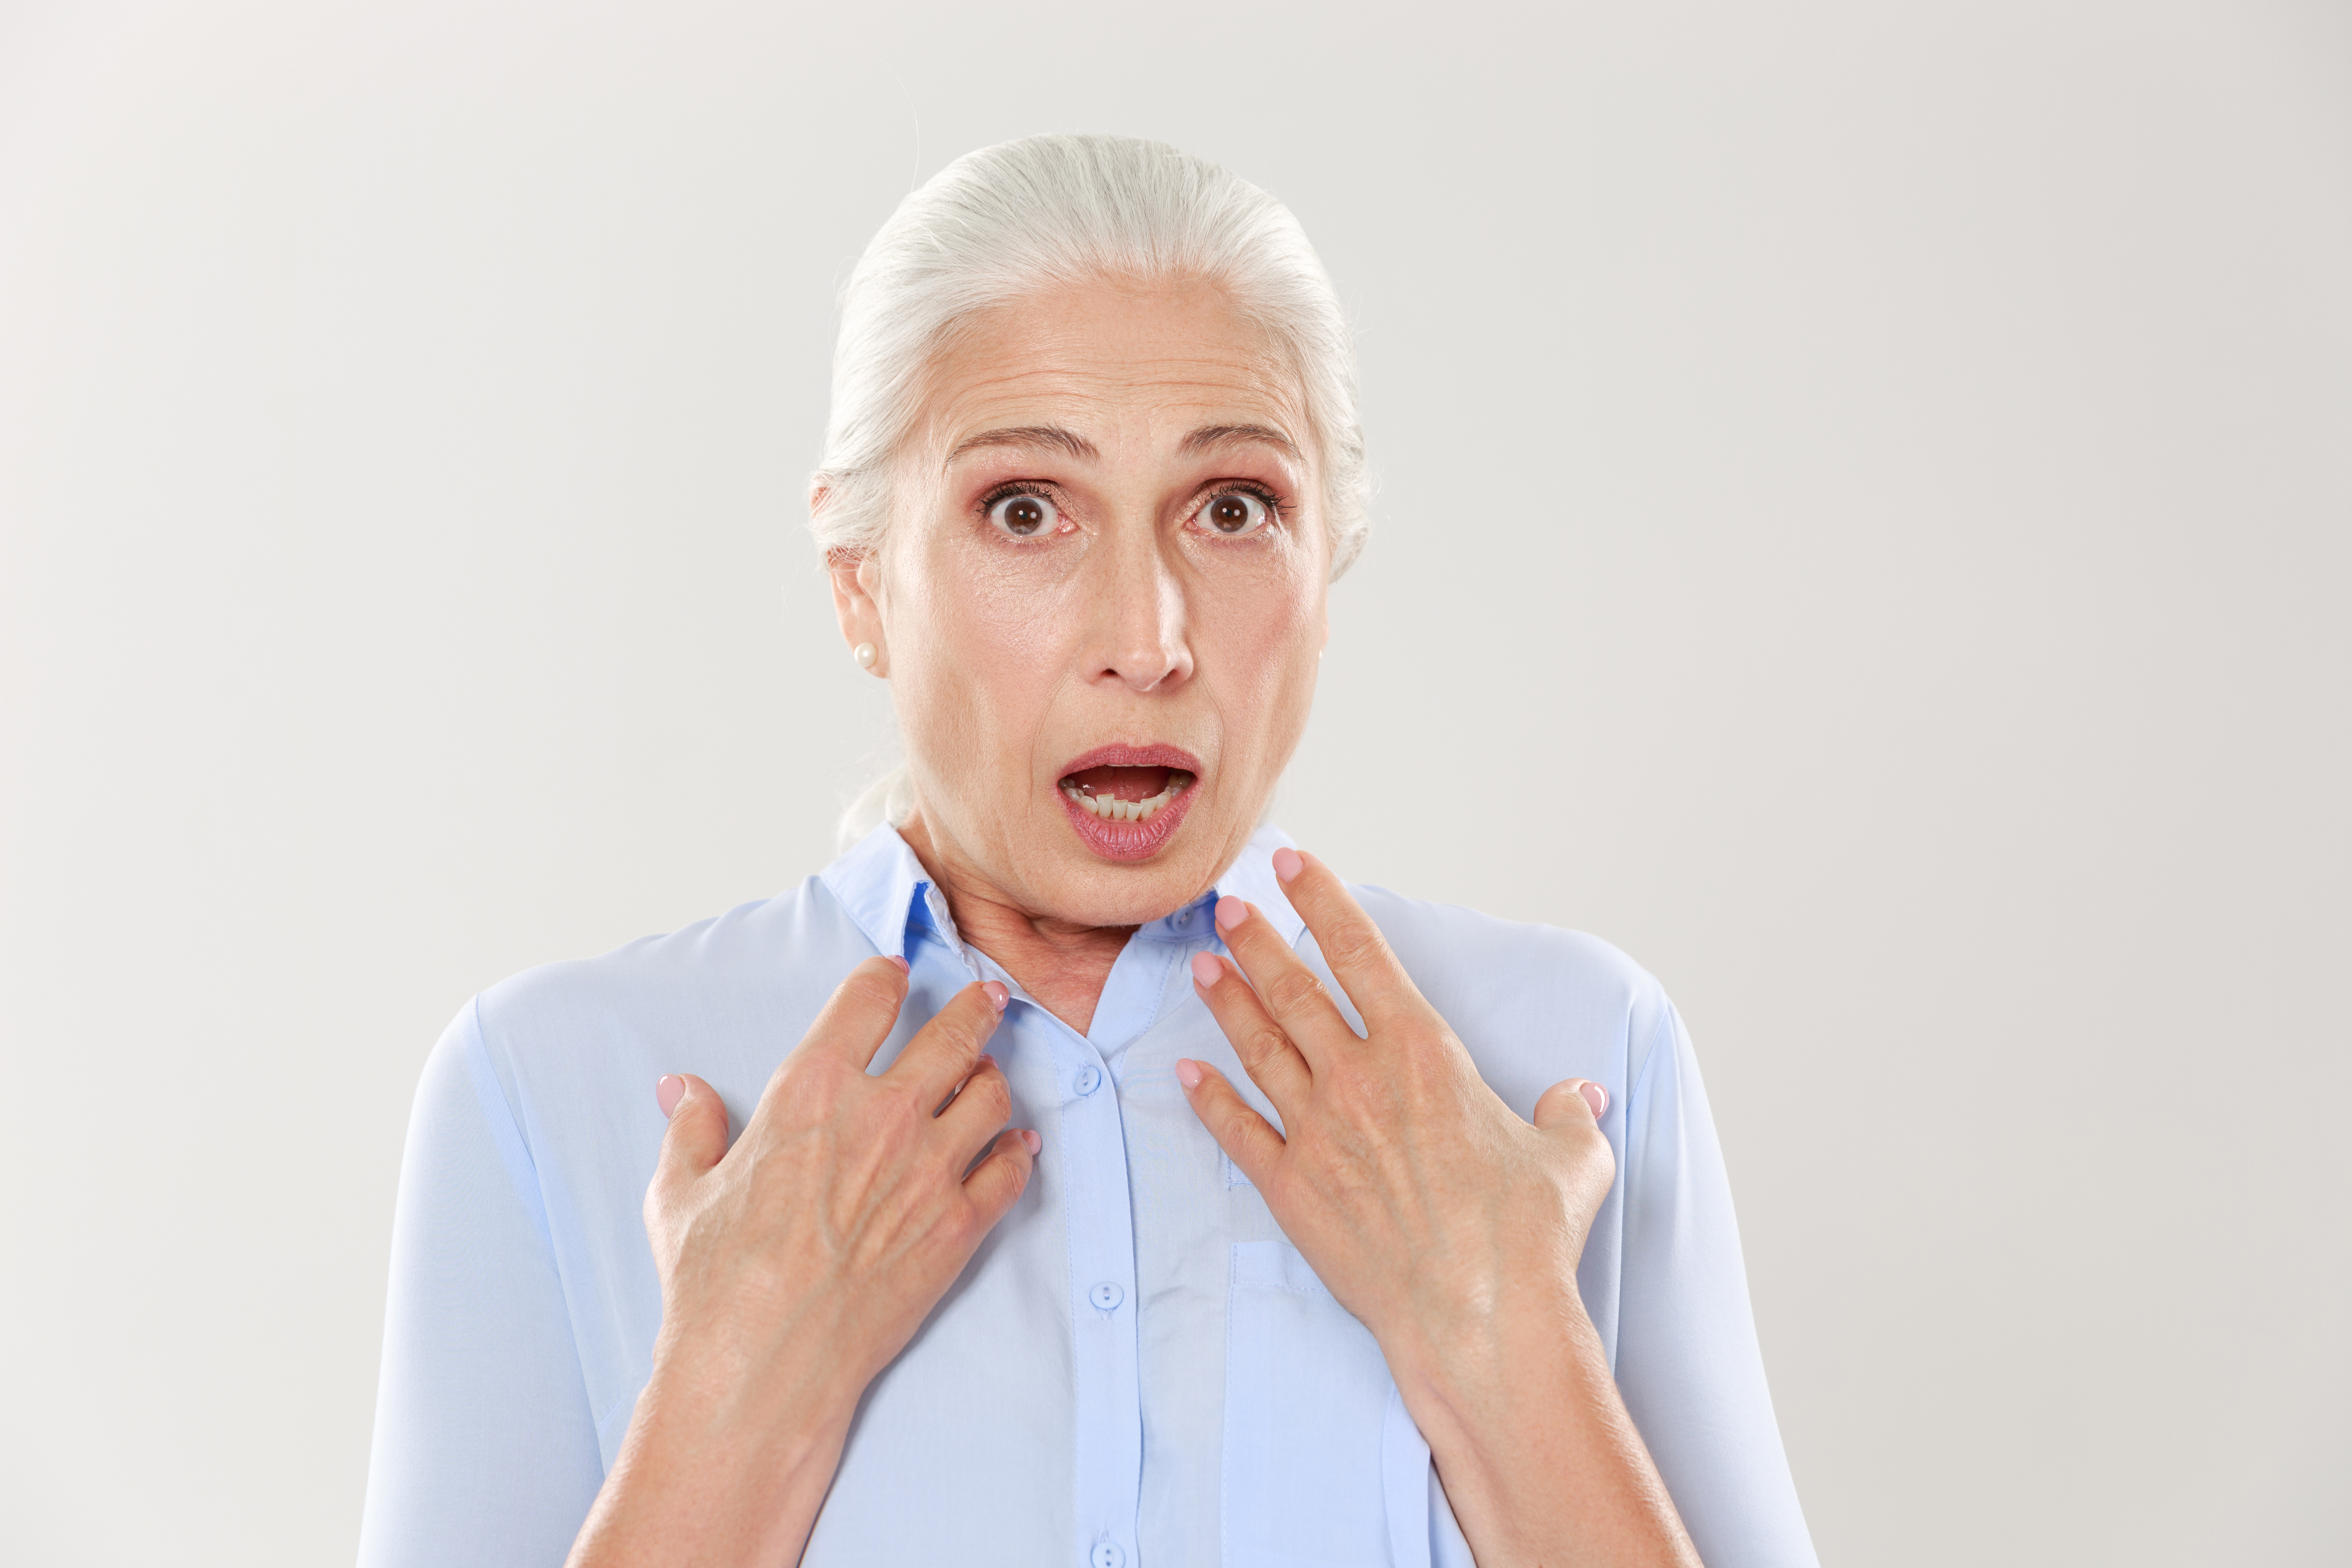 An older woman reacting in shock | Source: Shutterstock